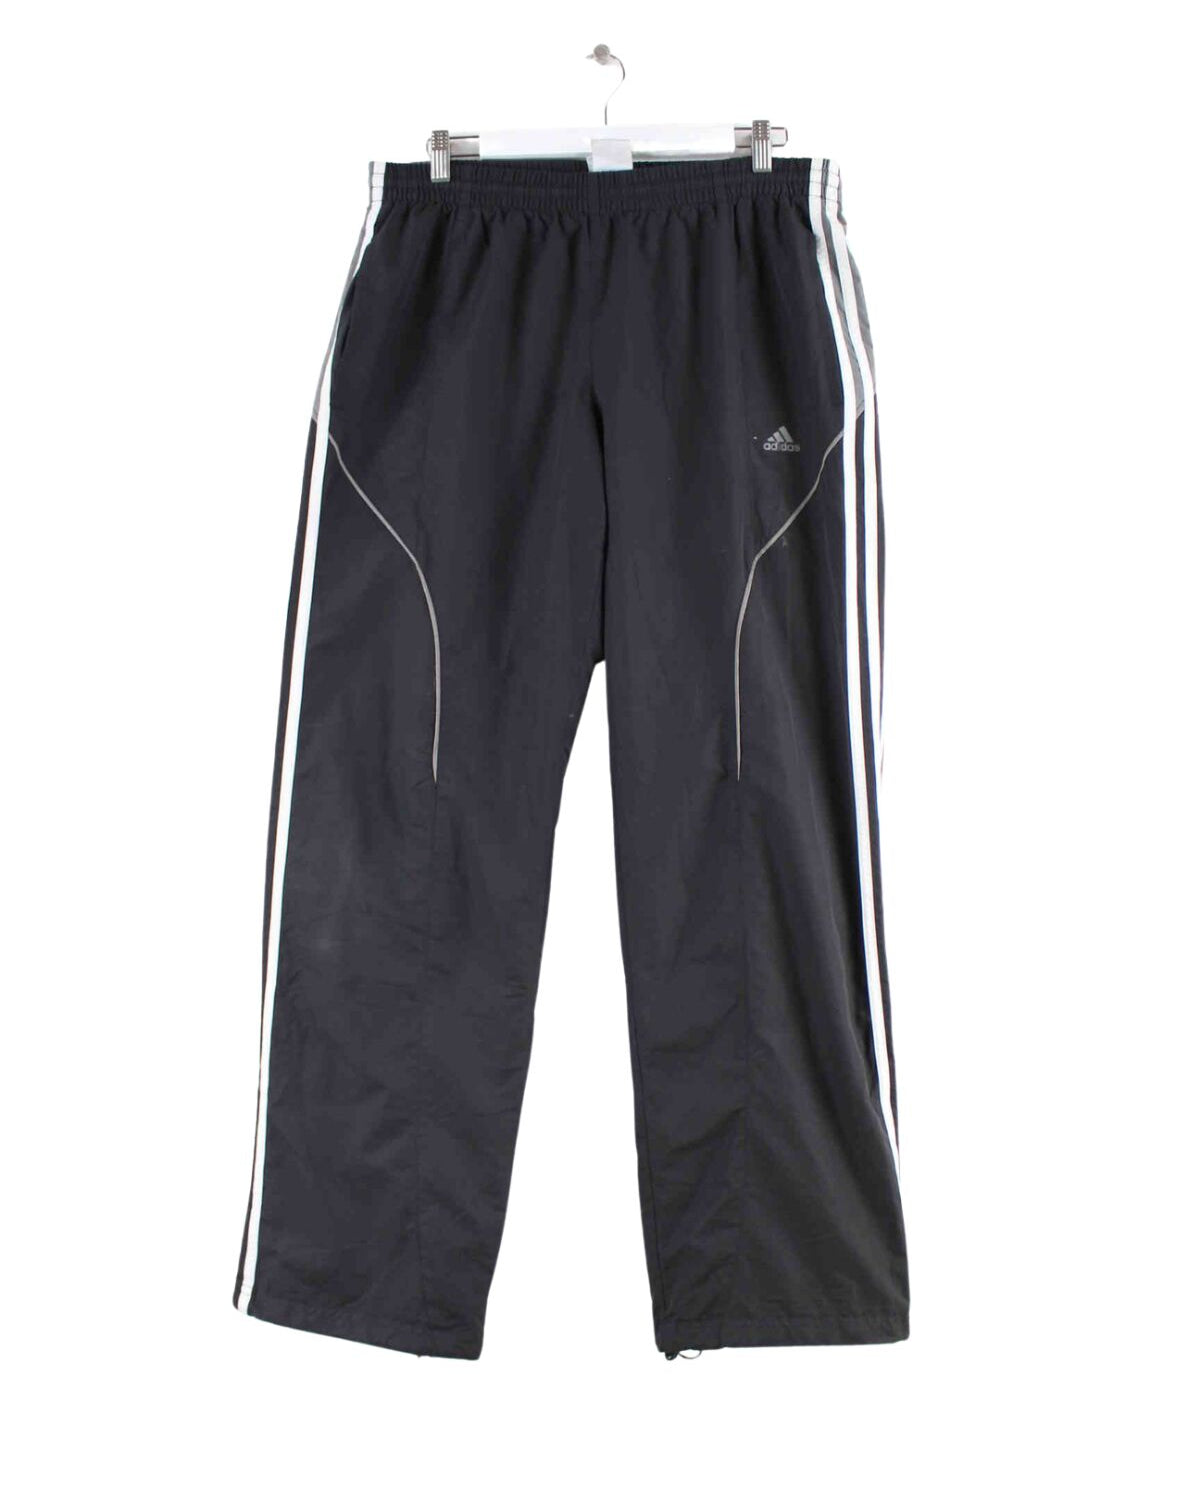 Adidas y2k 3-Stripes Track Pants Schwarz L (front image)